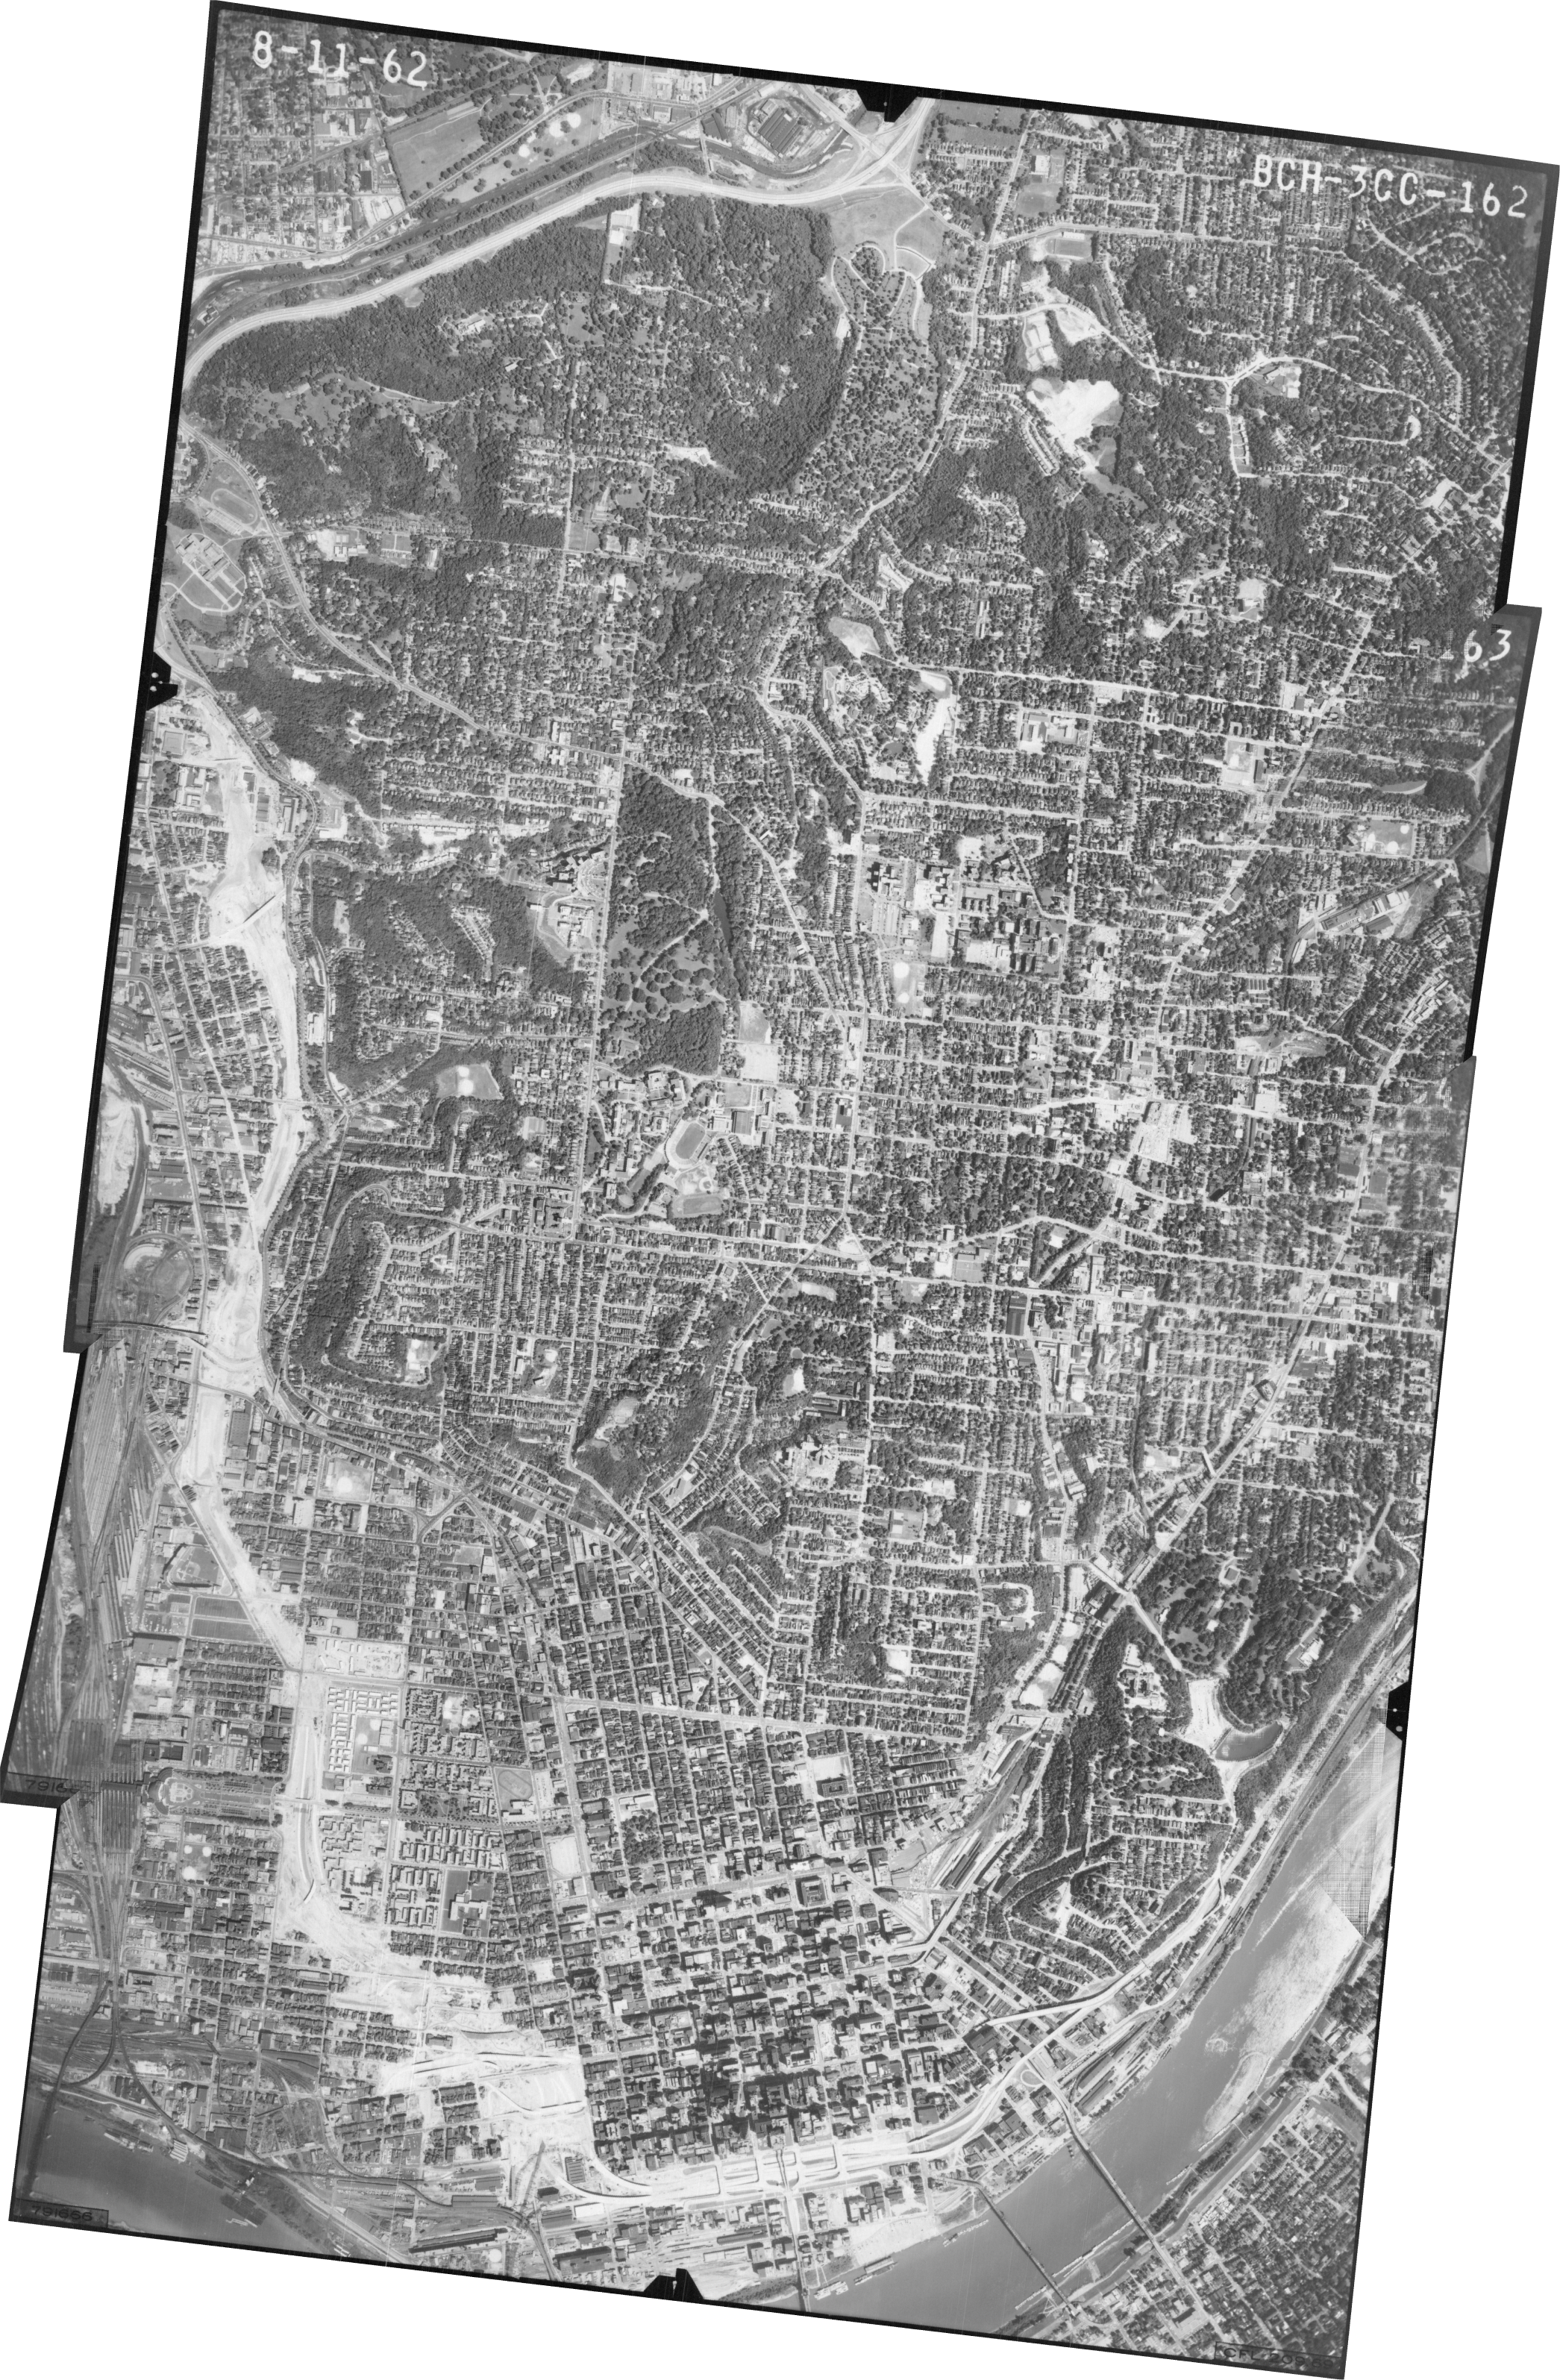 aerial imagery of Cincinnati from 1962